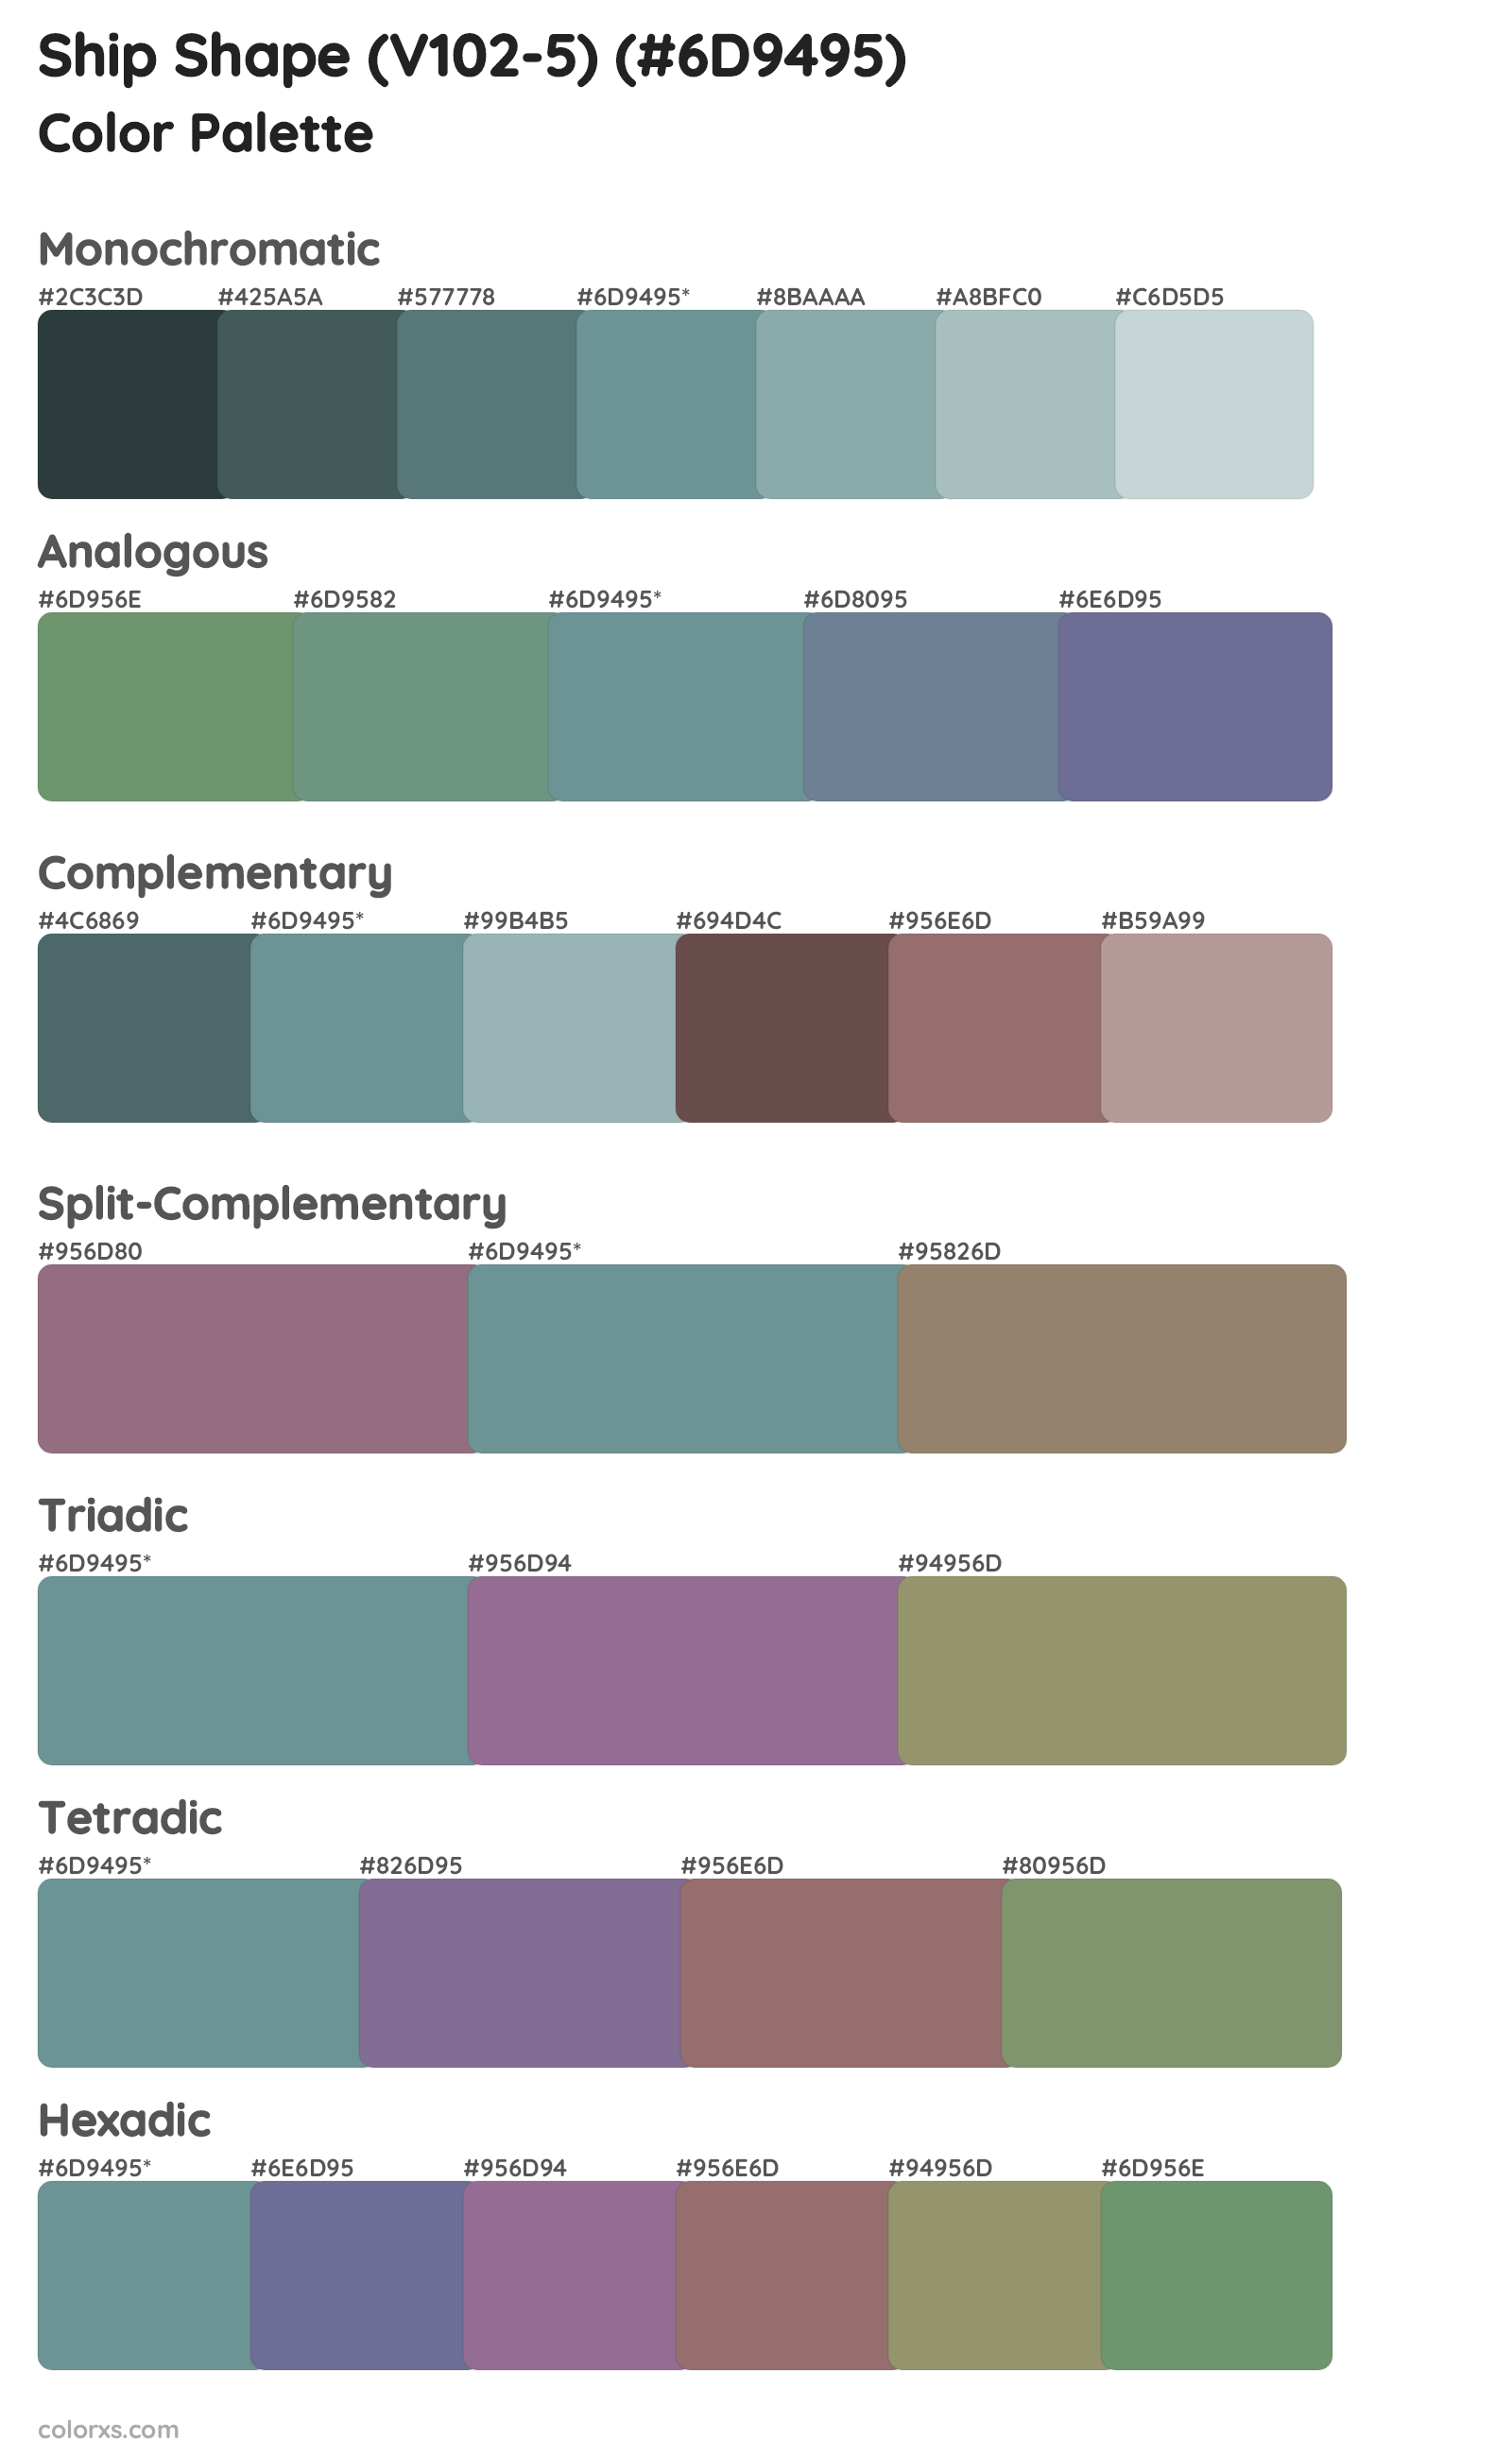 Ship Shape (V102-5) Color Scheme Palettes